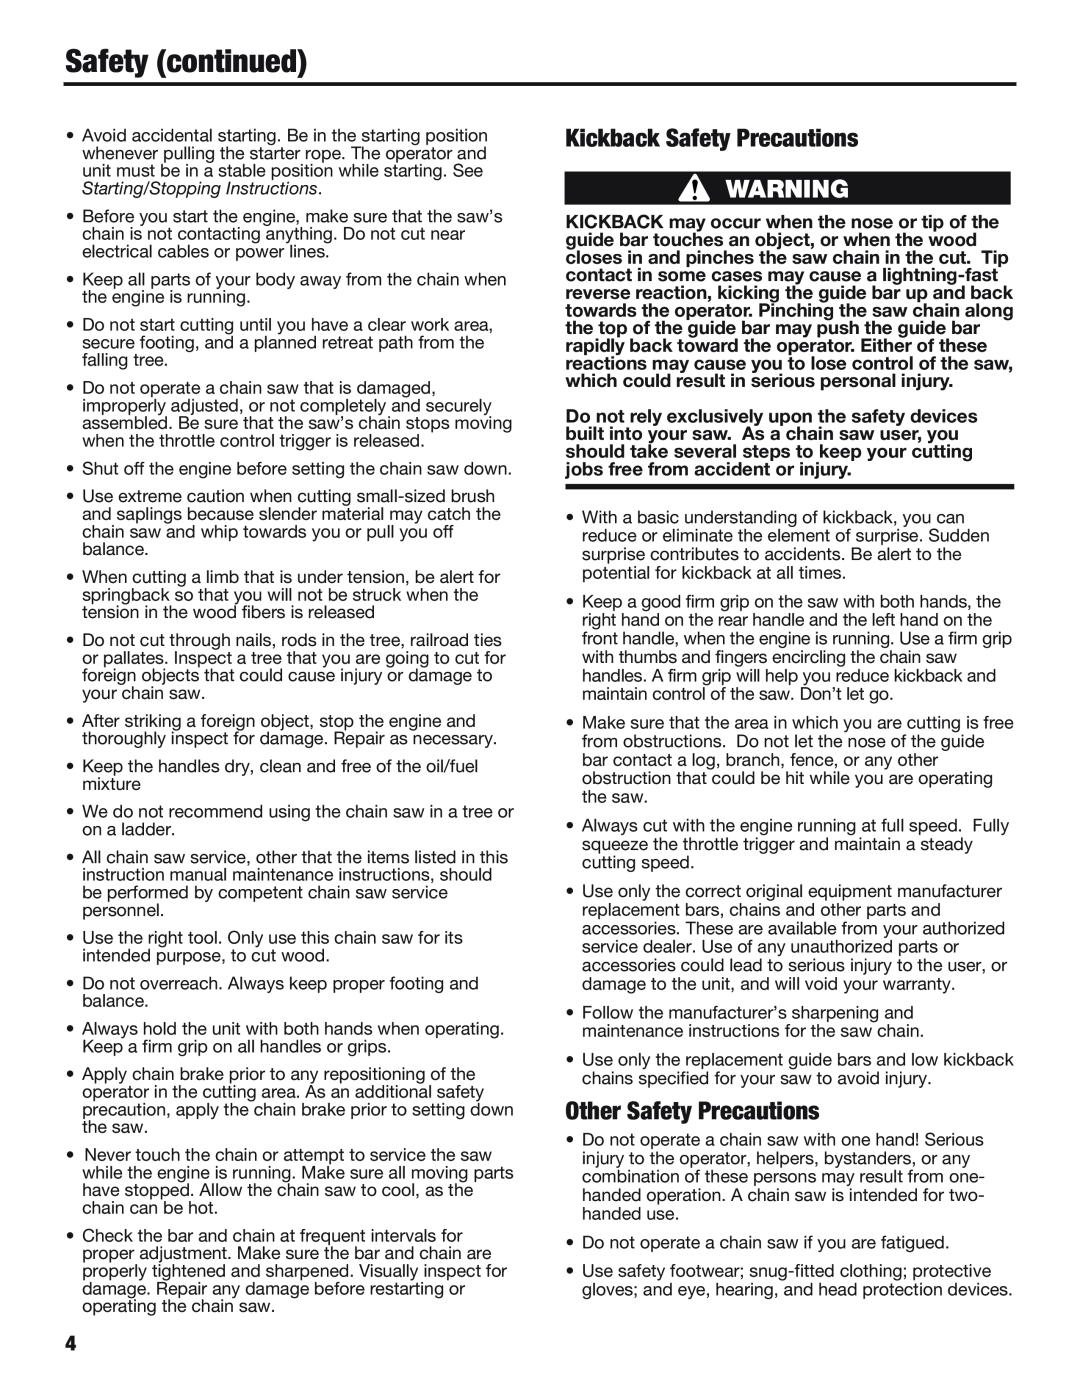 Cub Cadet CS5720 manual Safety continued, Kickback Safety Precautions, Other Safety Precautions 